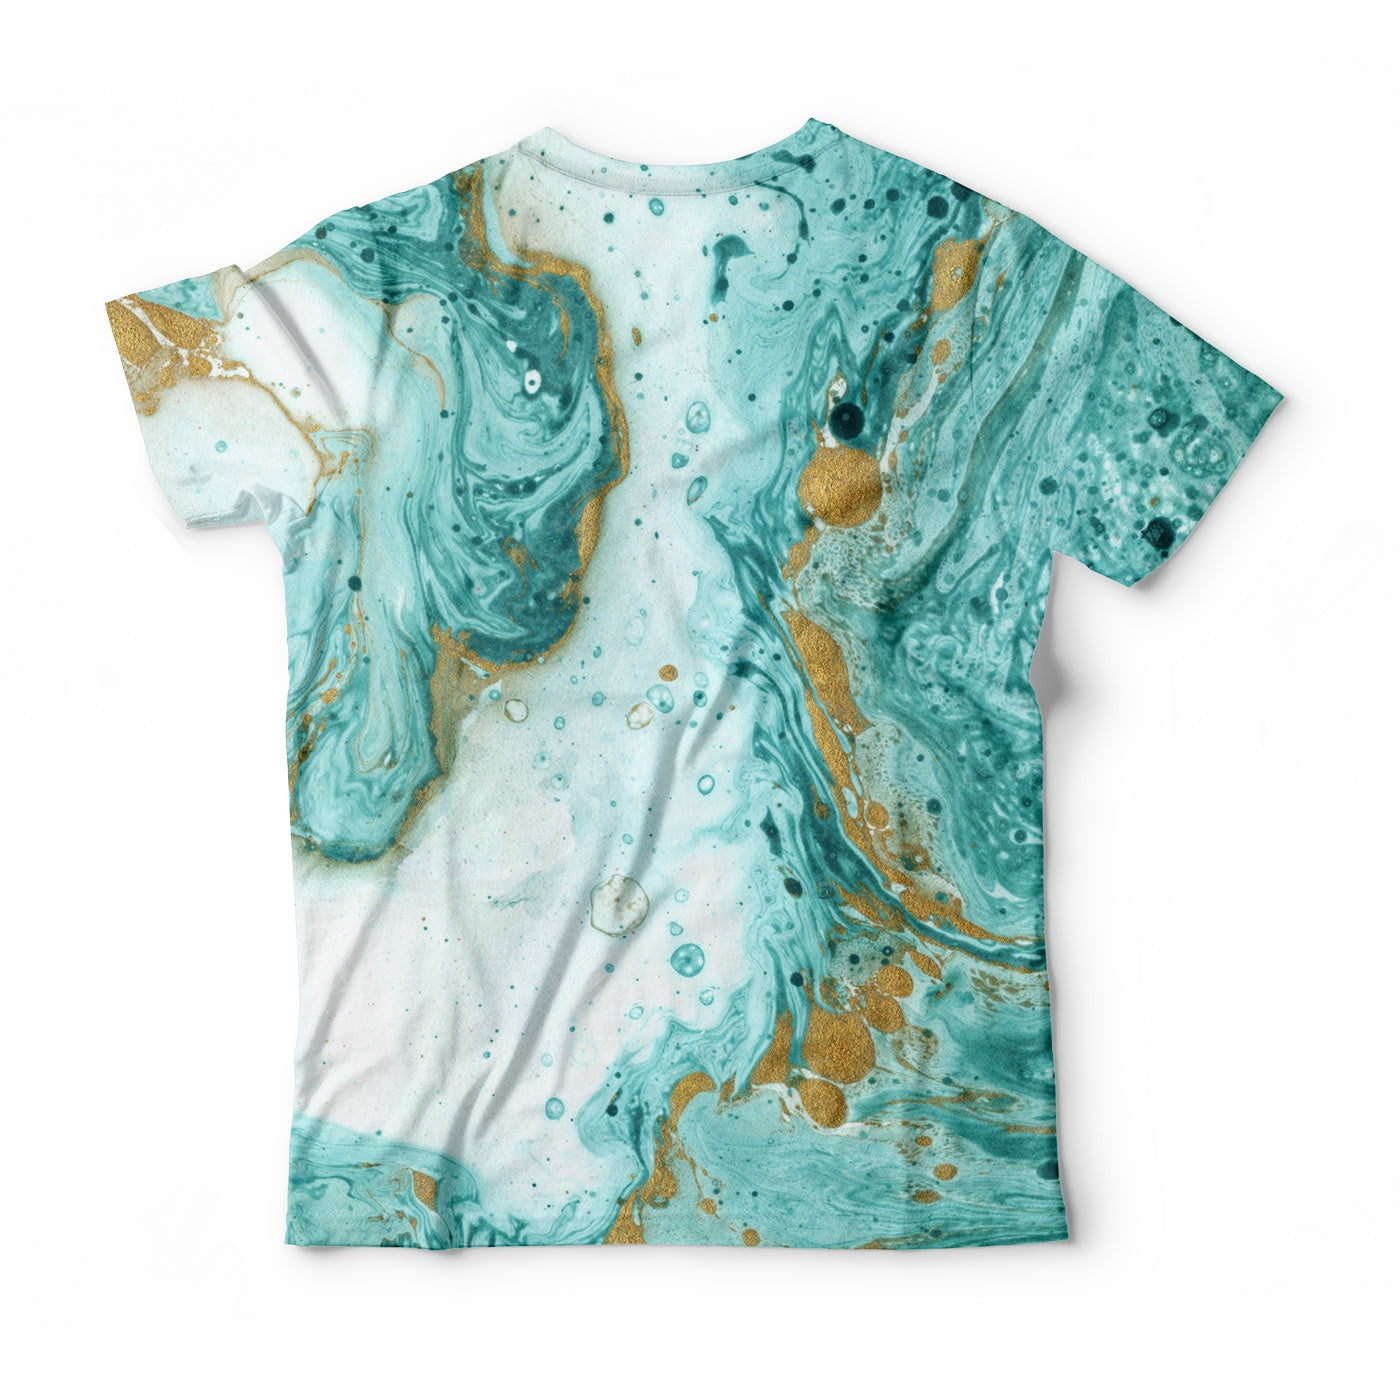 Decorative Marble Texture T-Shirt